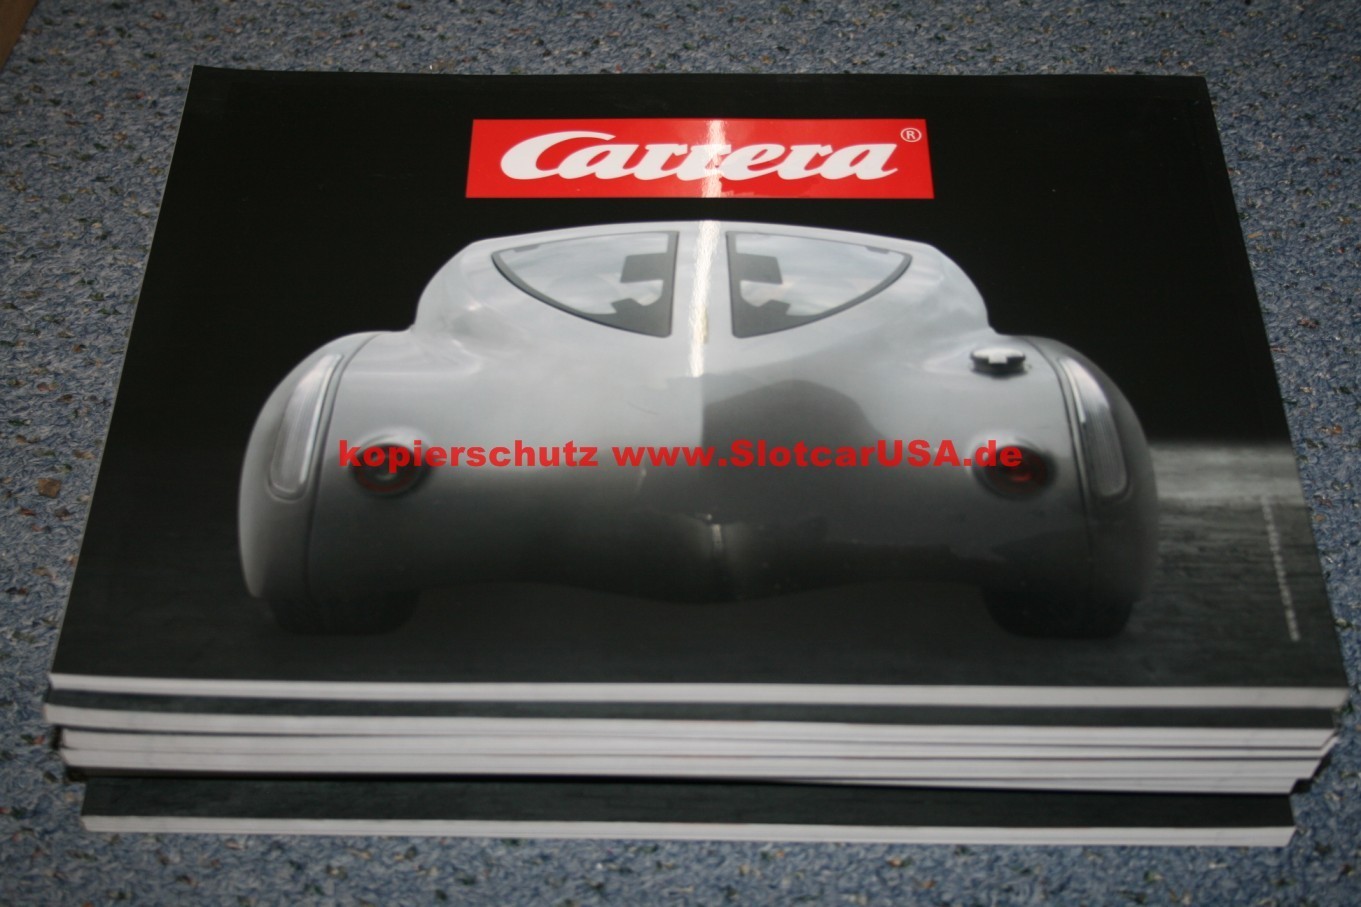 Carrera Katalog USA 2009 30131 